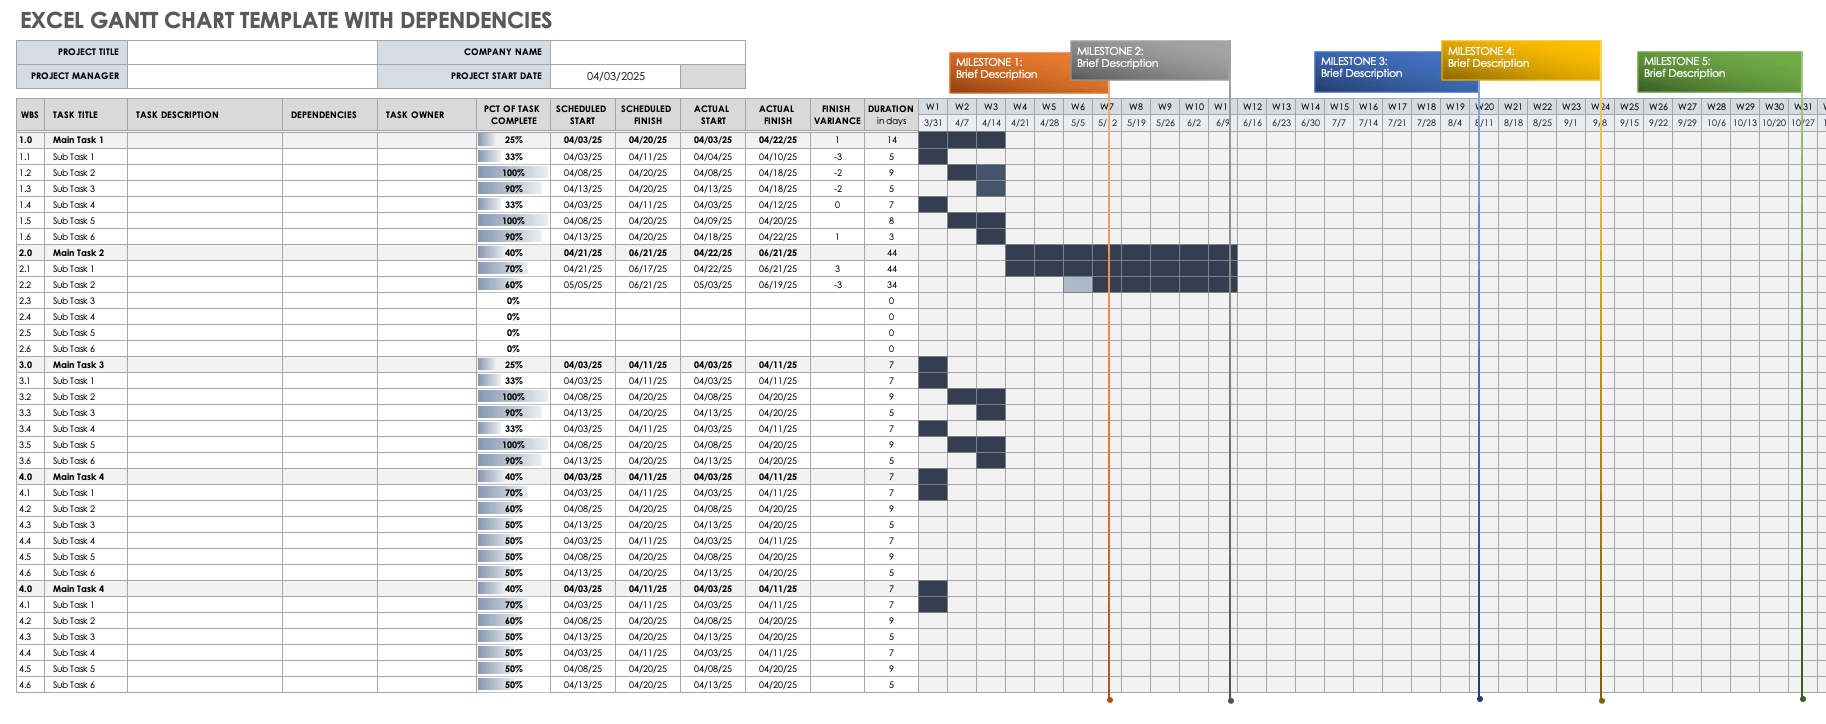 Image of Excel Gantt Chart Template with Dependencies from Smartsheet